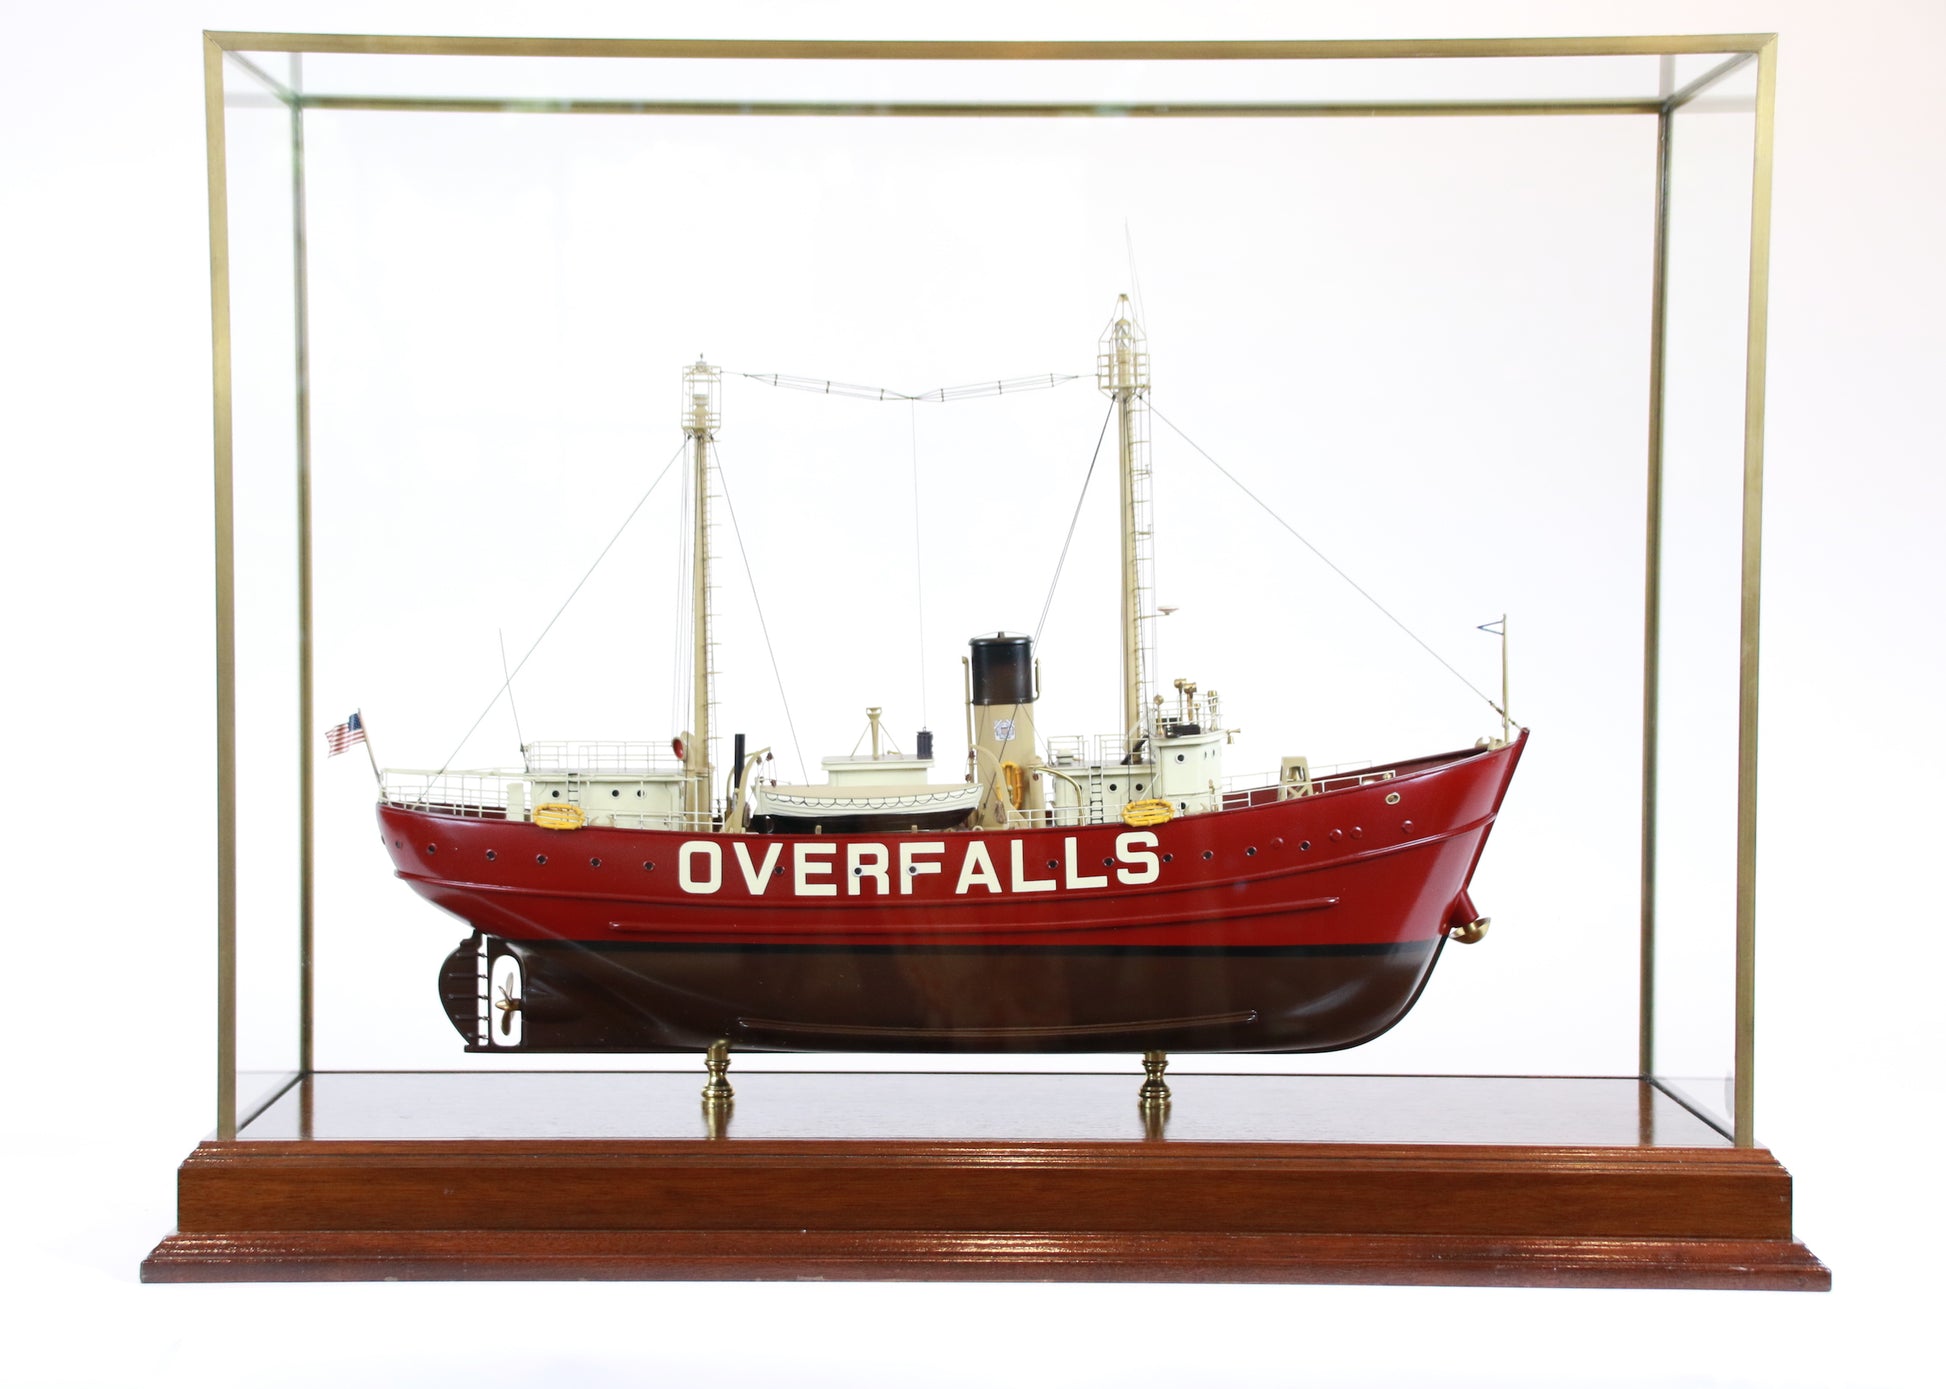 Coast Guard Vessel "Overfalls" - Lannan Gallery